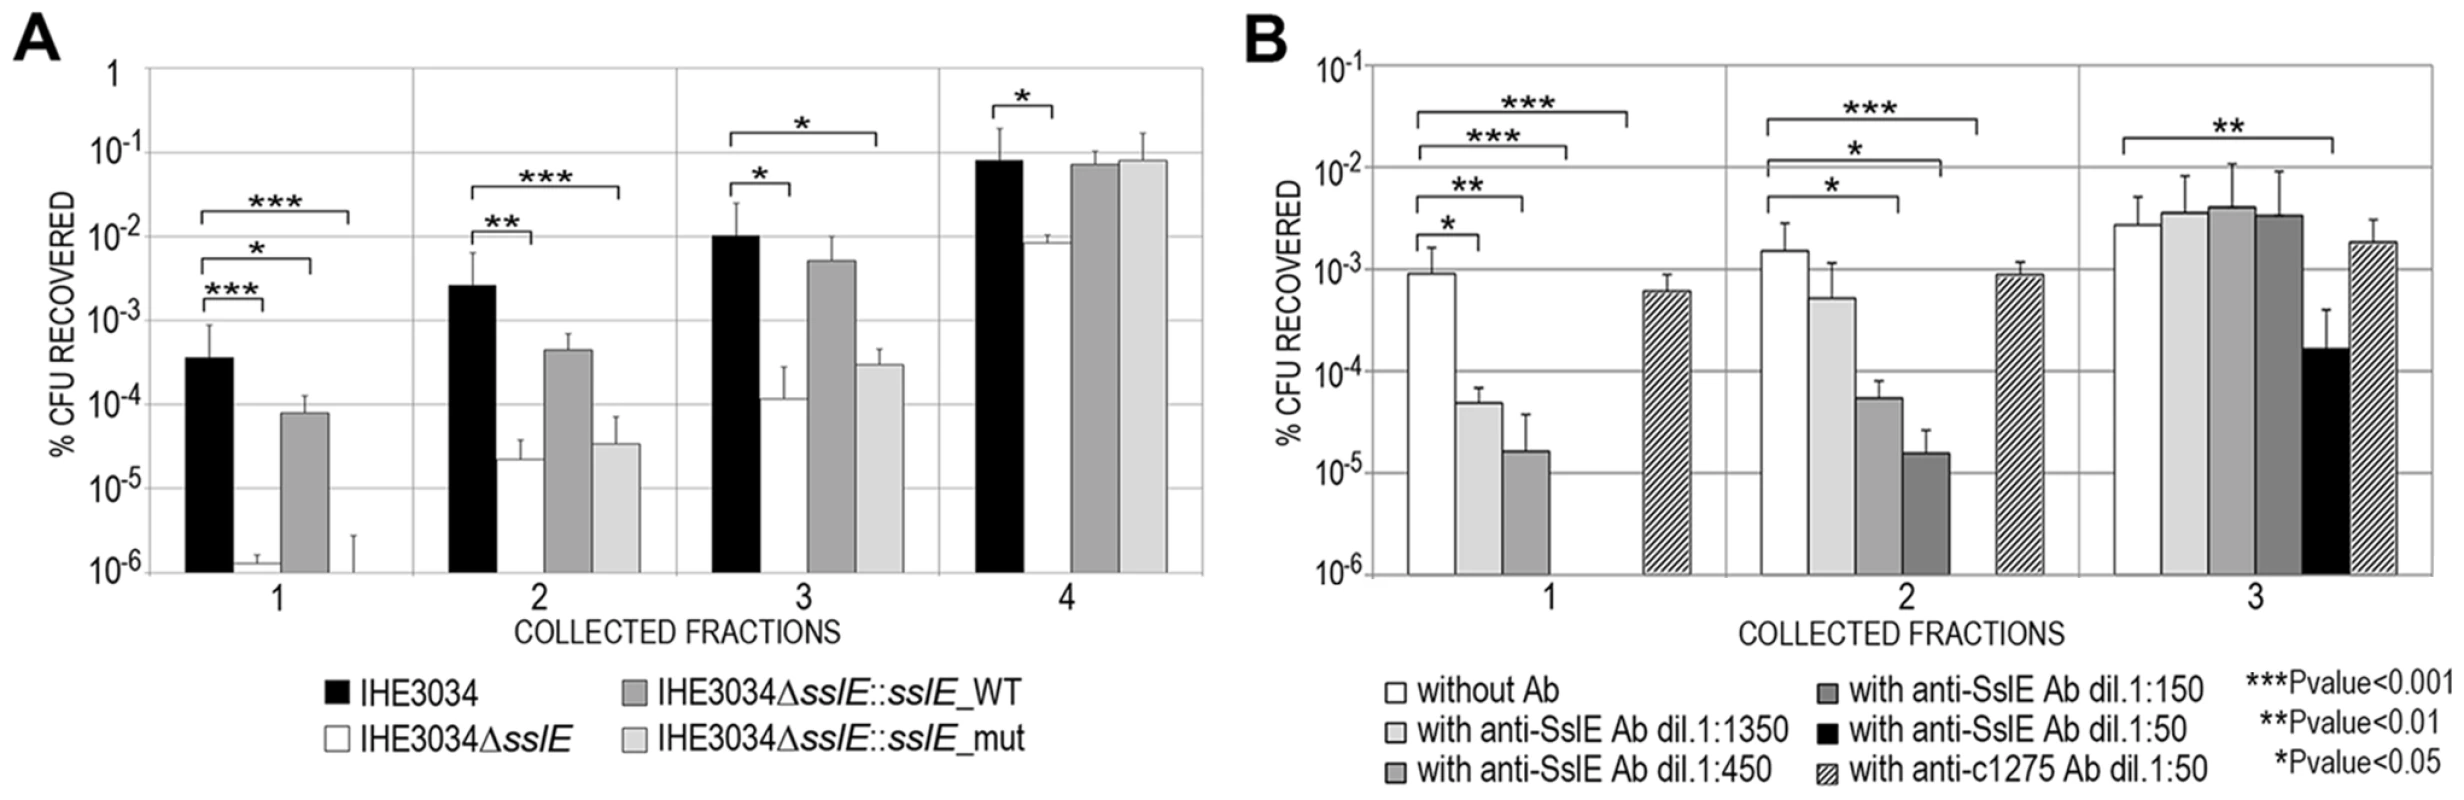 Anti-SslE antibodies impair translocation of <i>E. coli</i> through a mucin-gel matrix.